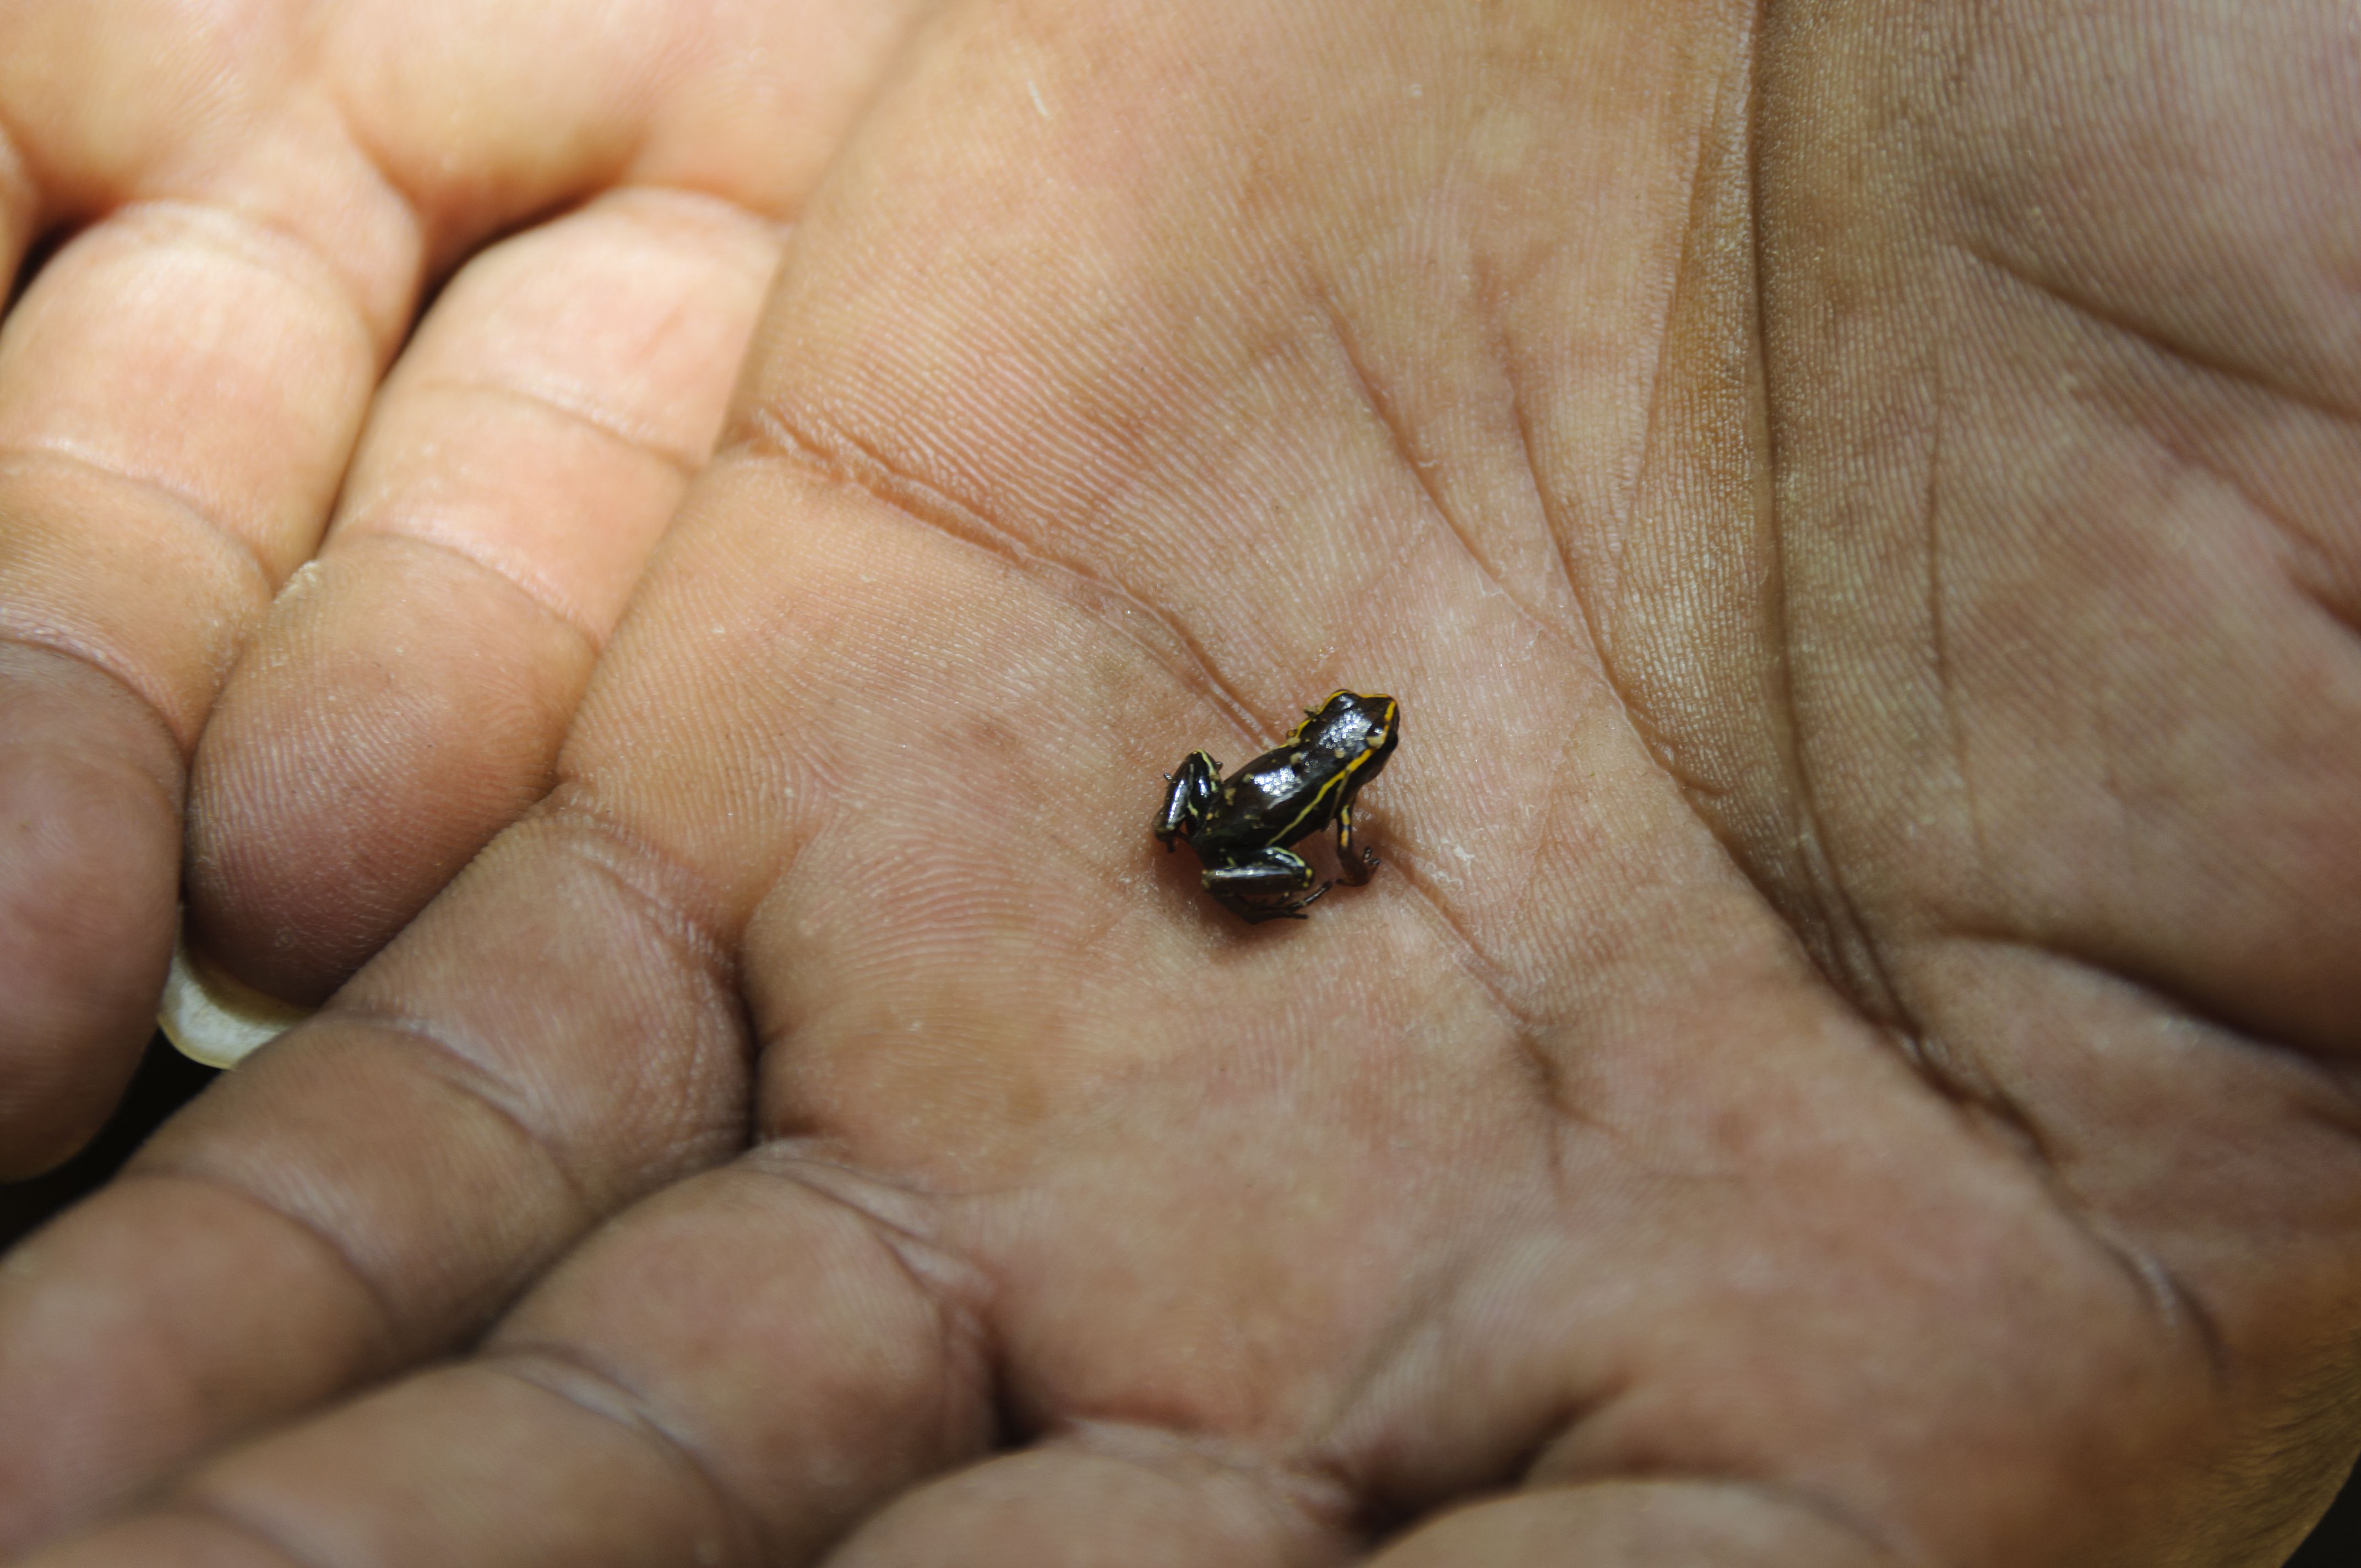 Small Frog Eleutherodactylus Iberia Royalty Free Image 1600997695 